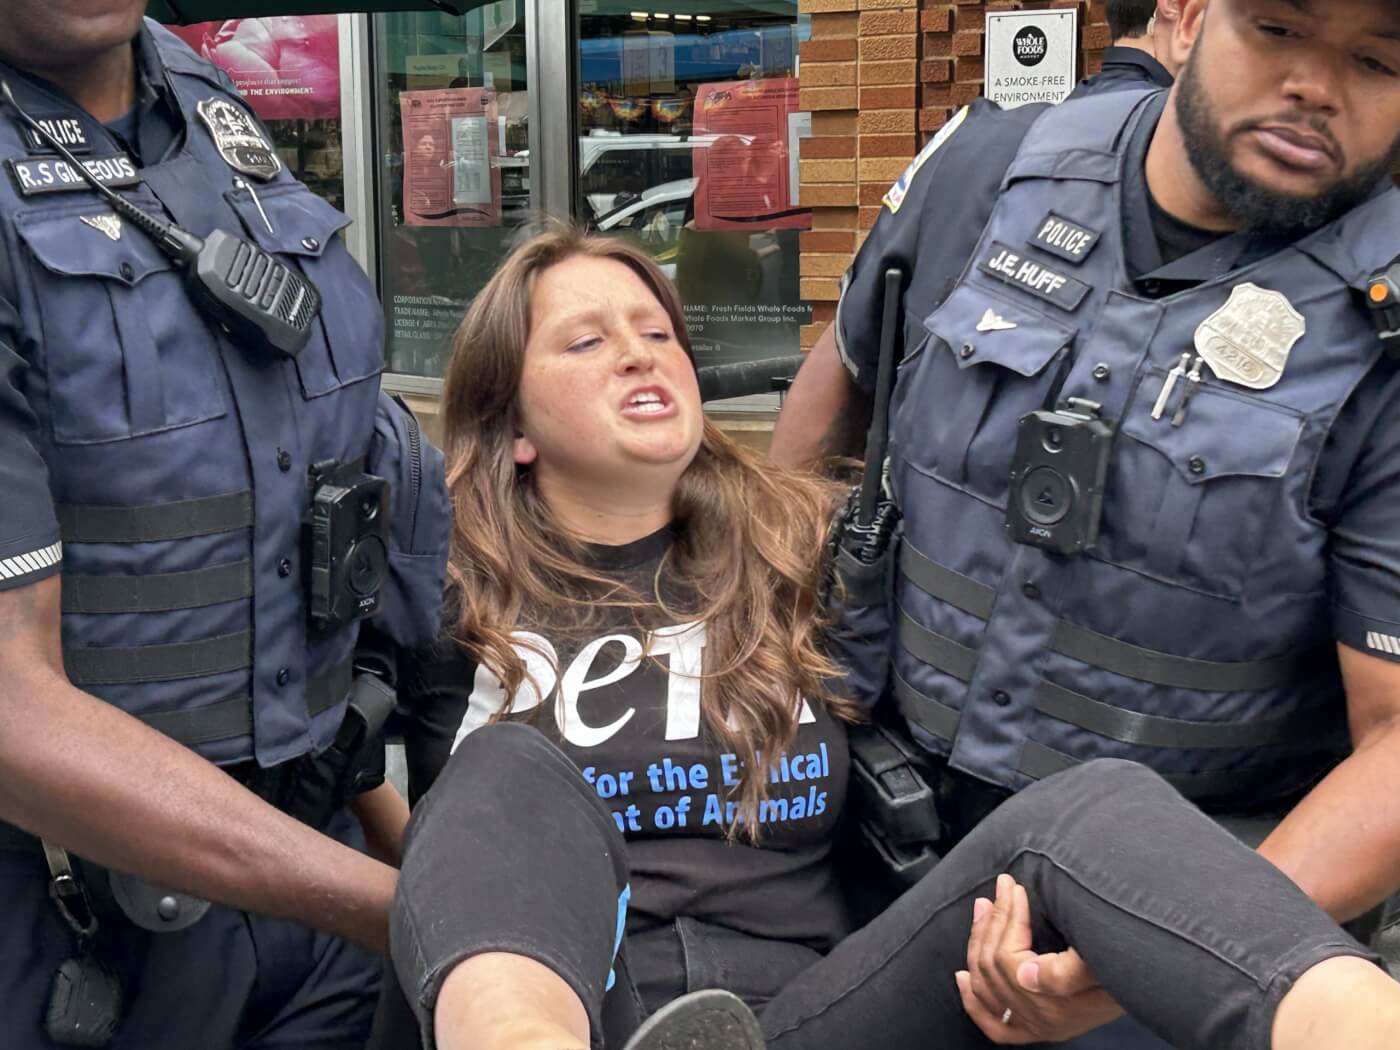 PETA member arrested outside Whole Foods store in Washington, D.C.